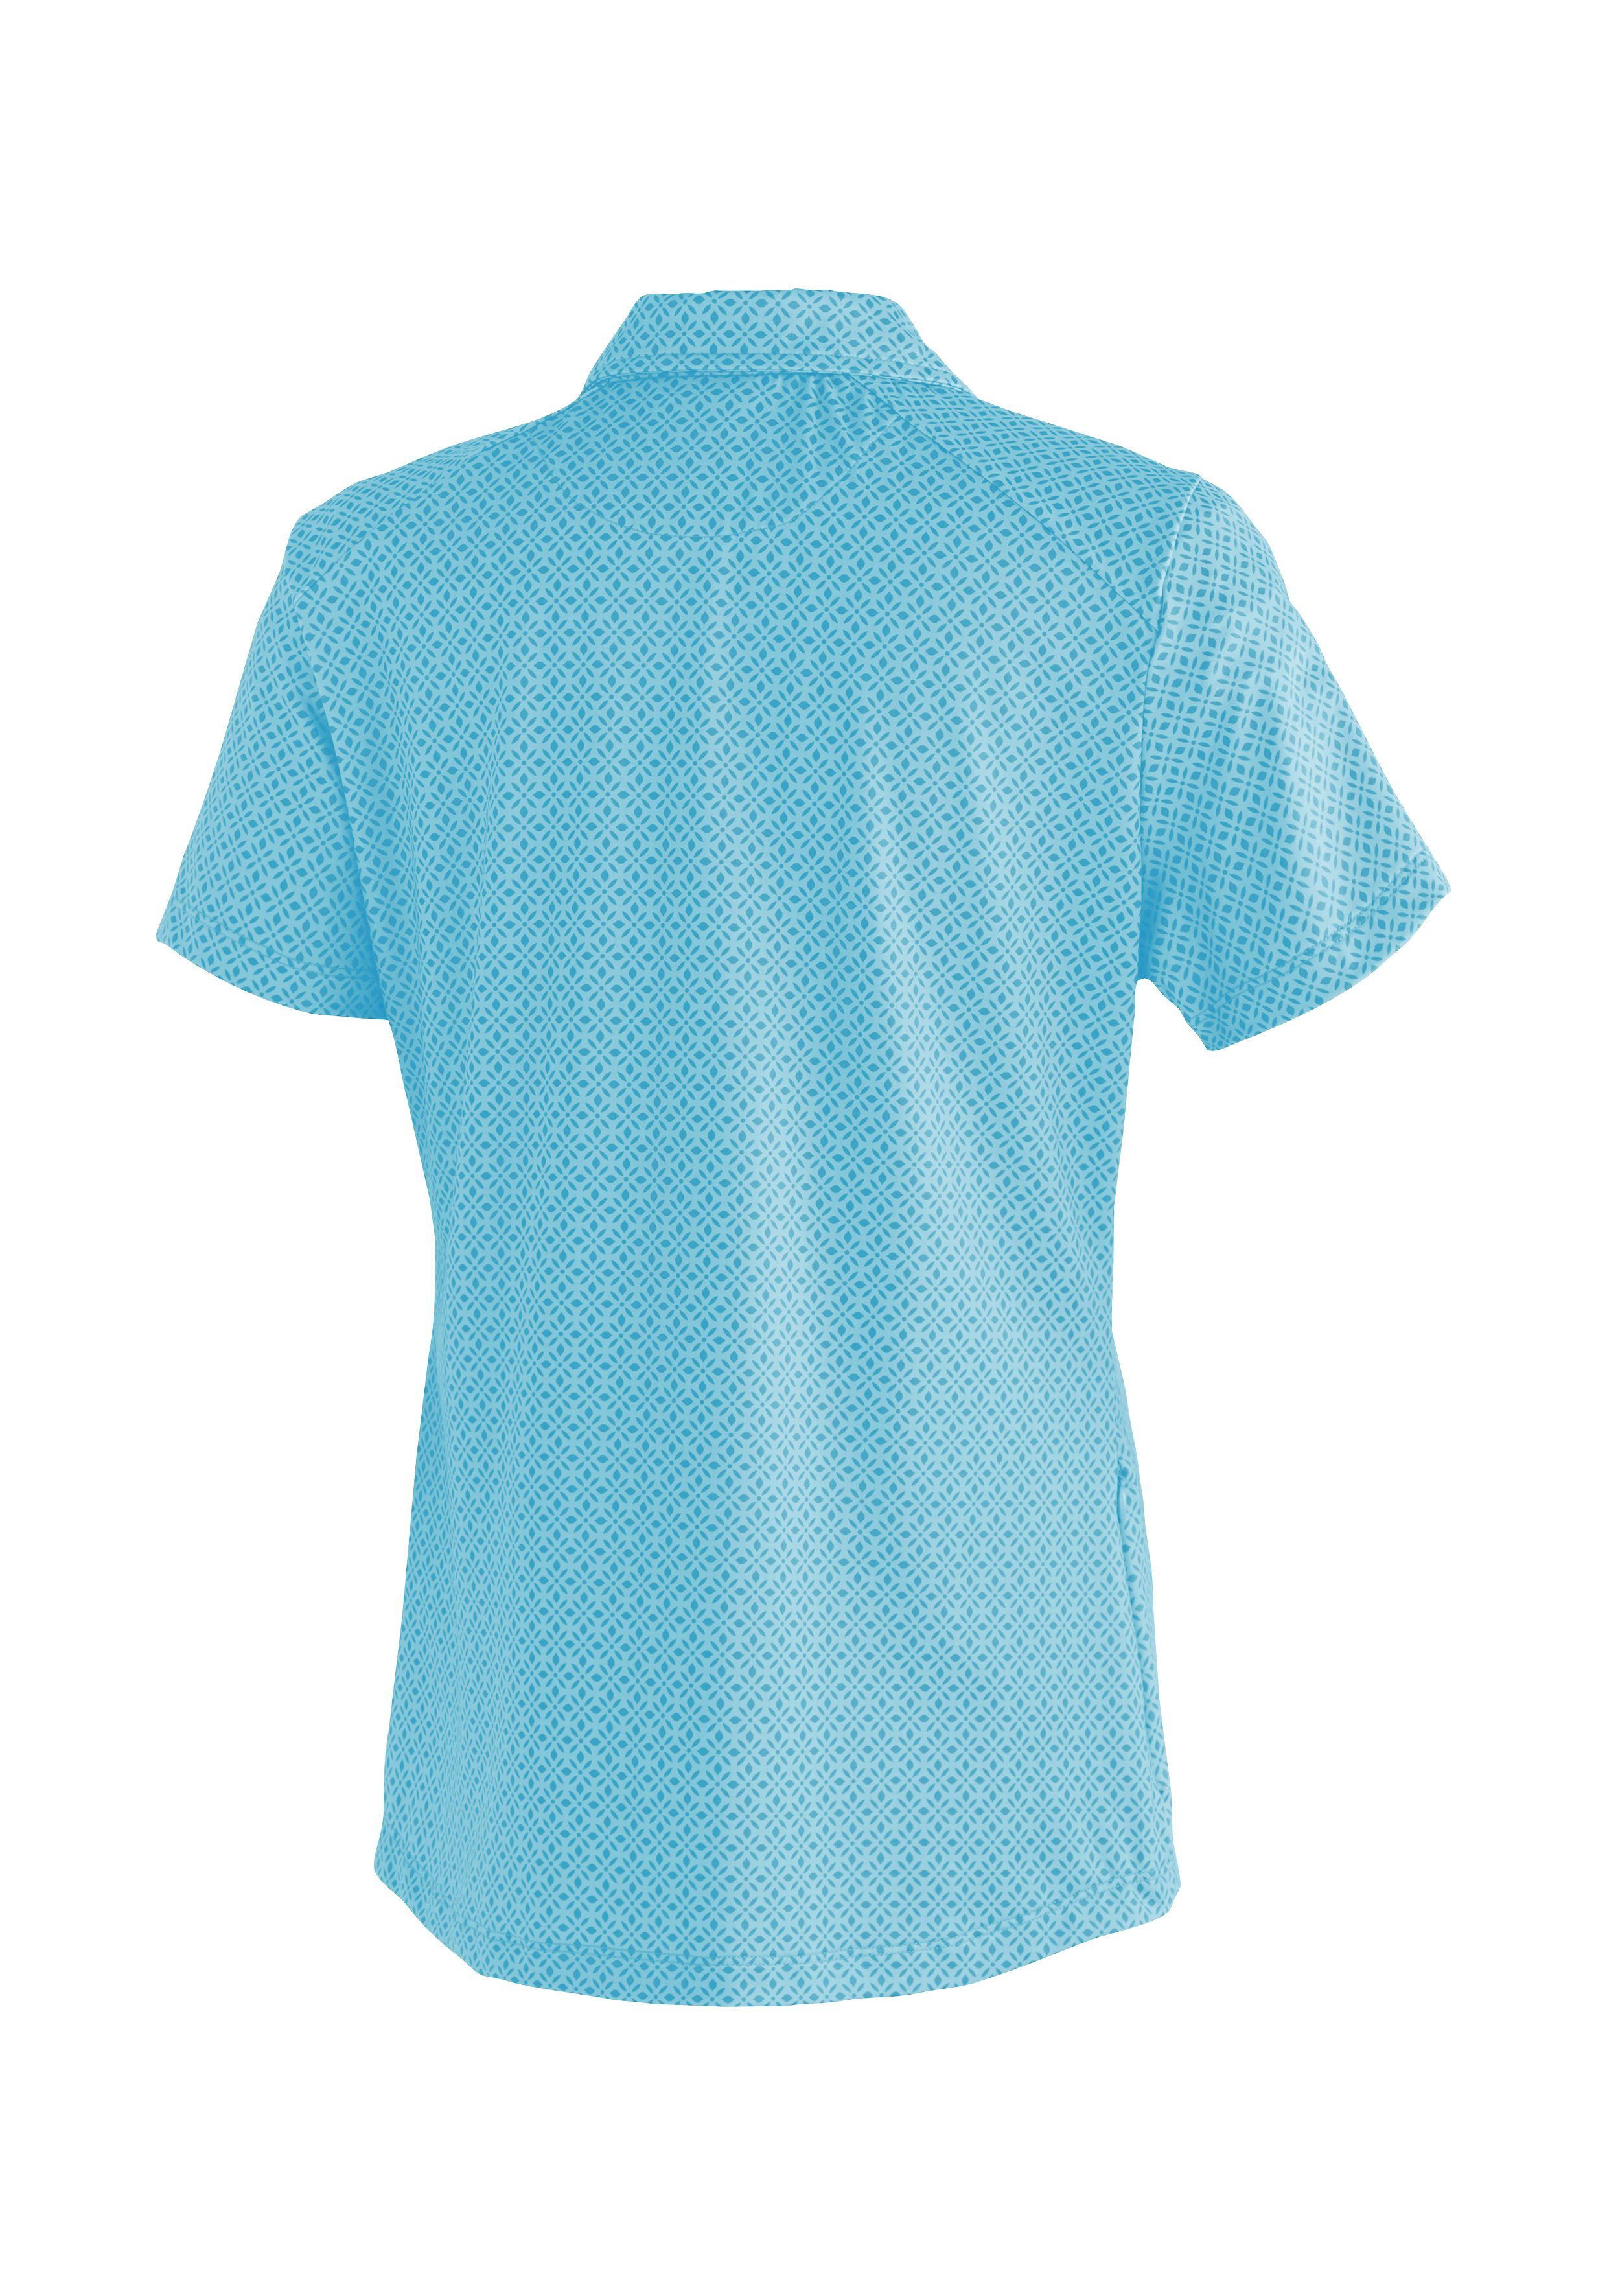 Maier Sports Funktionsshirt Polo-Shirt Damen Pandy W Hemdkragen mit babyblau